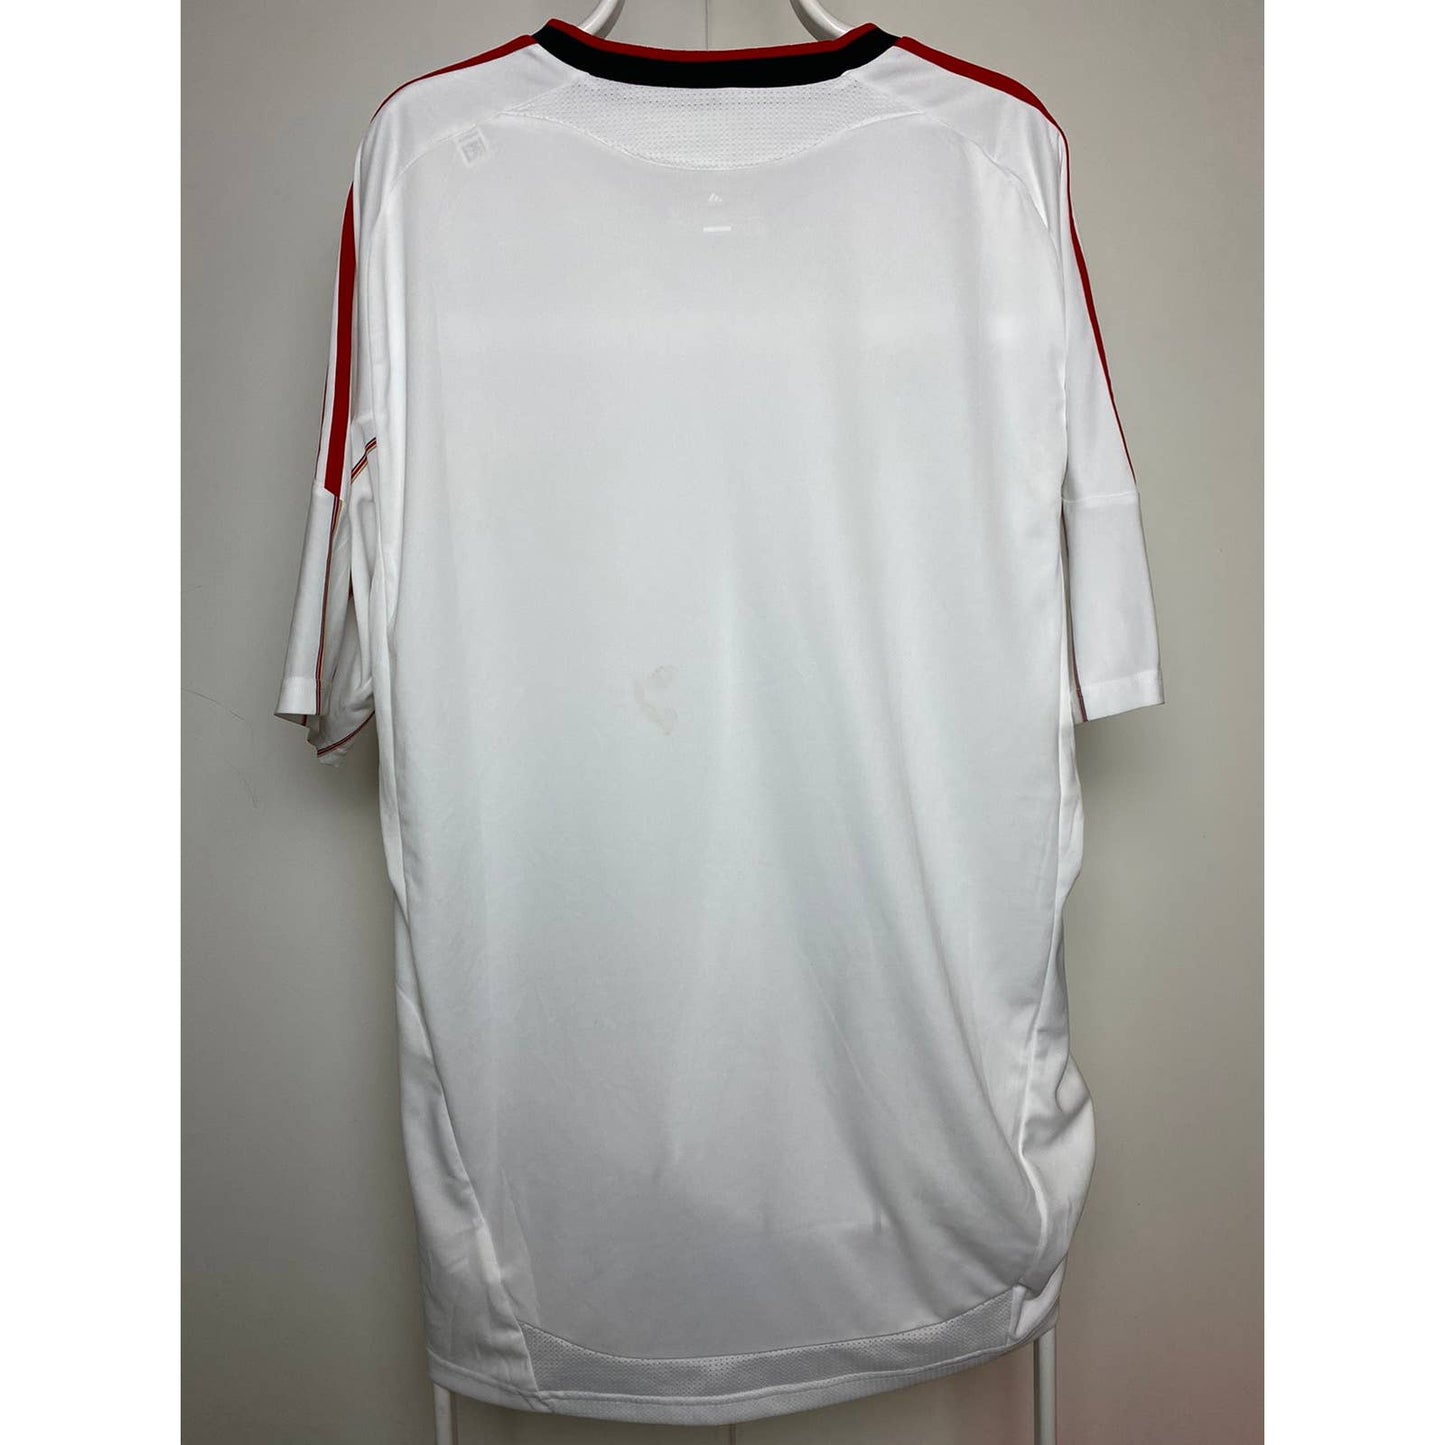 Liverpool Adidas soccer shirt jersey white